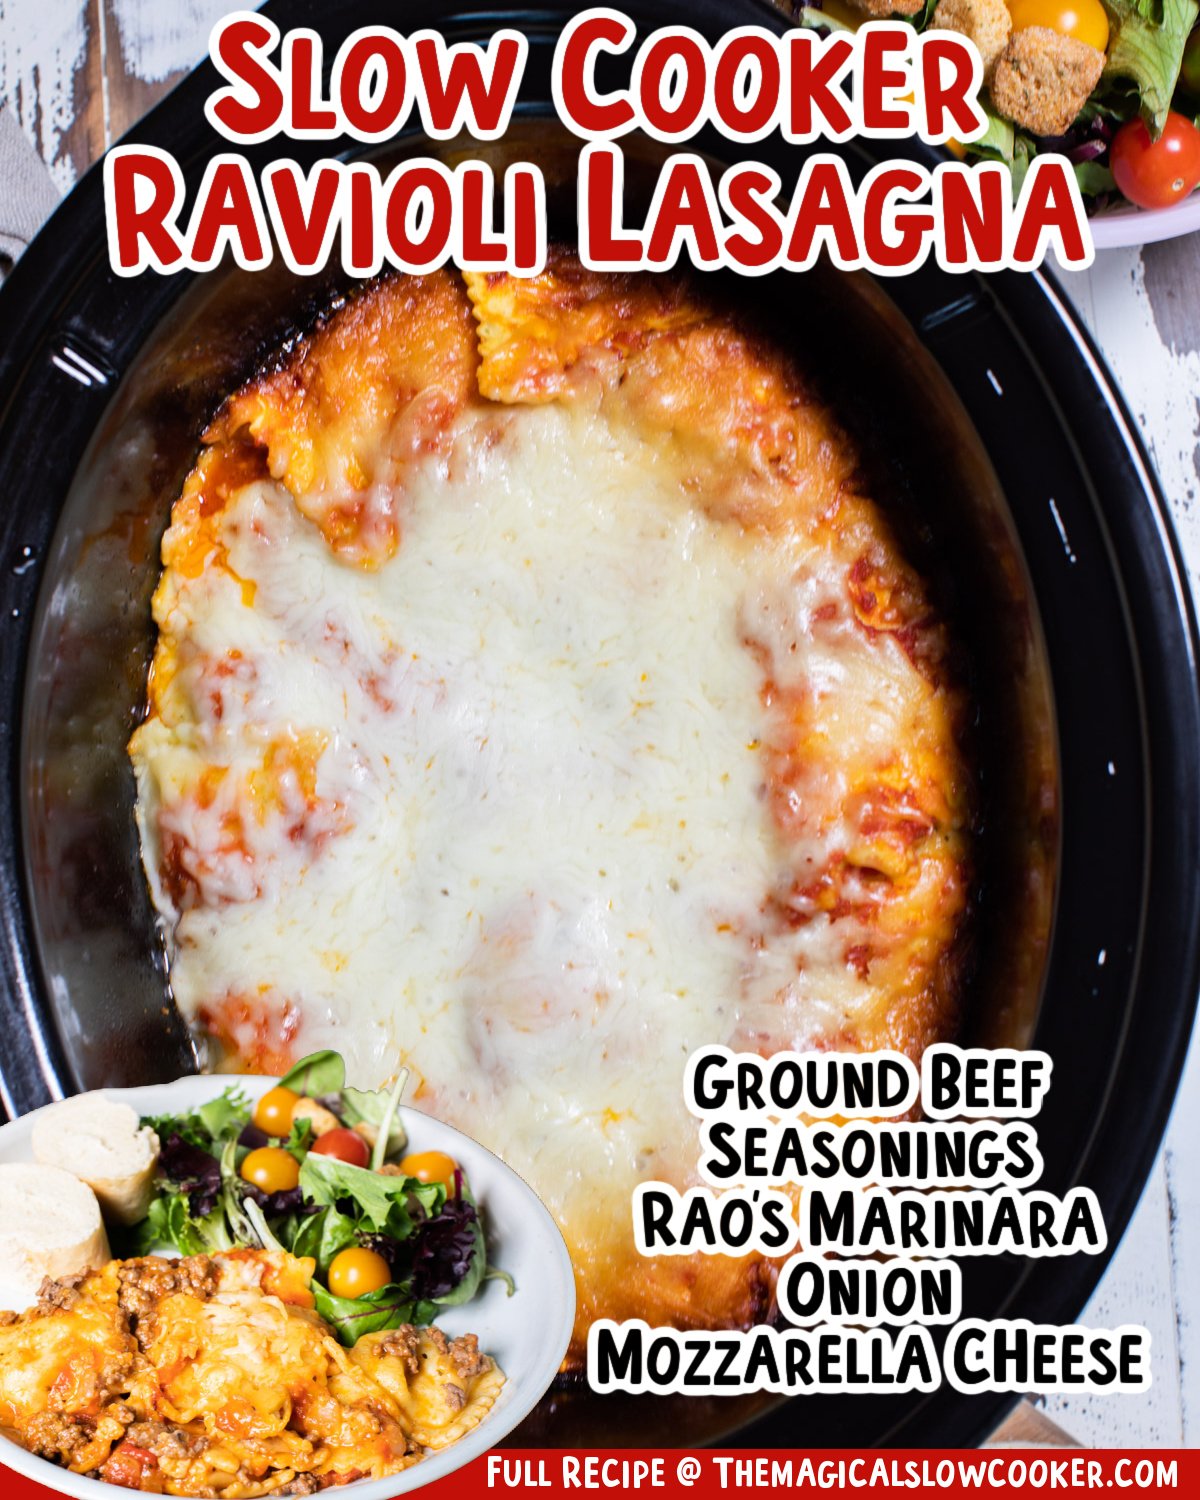 images of ravioli lasgna for facebook.